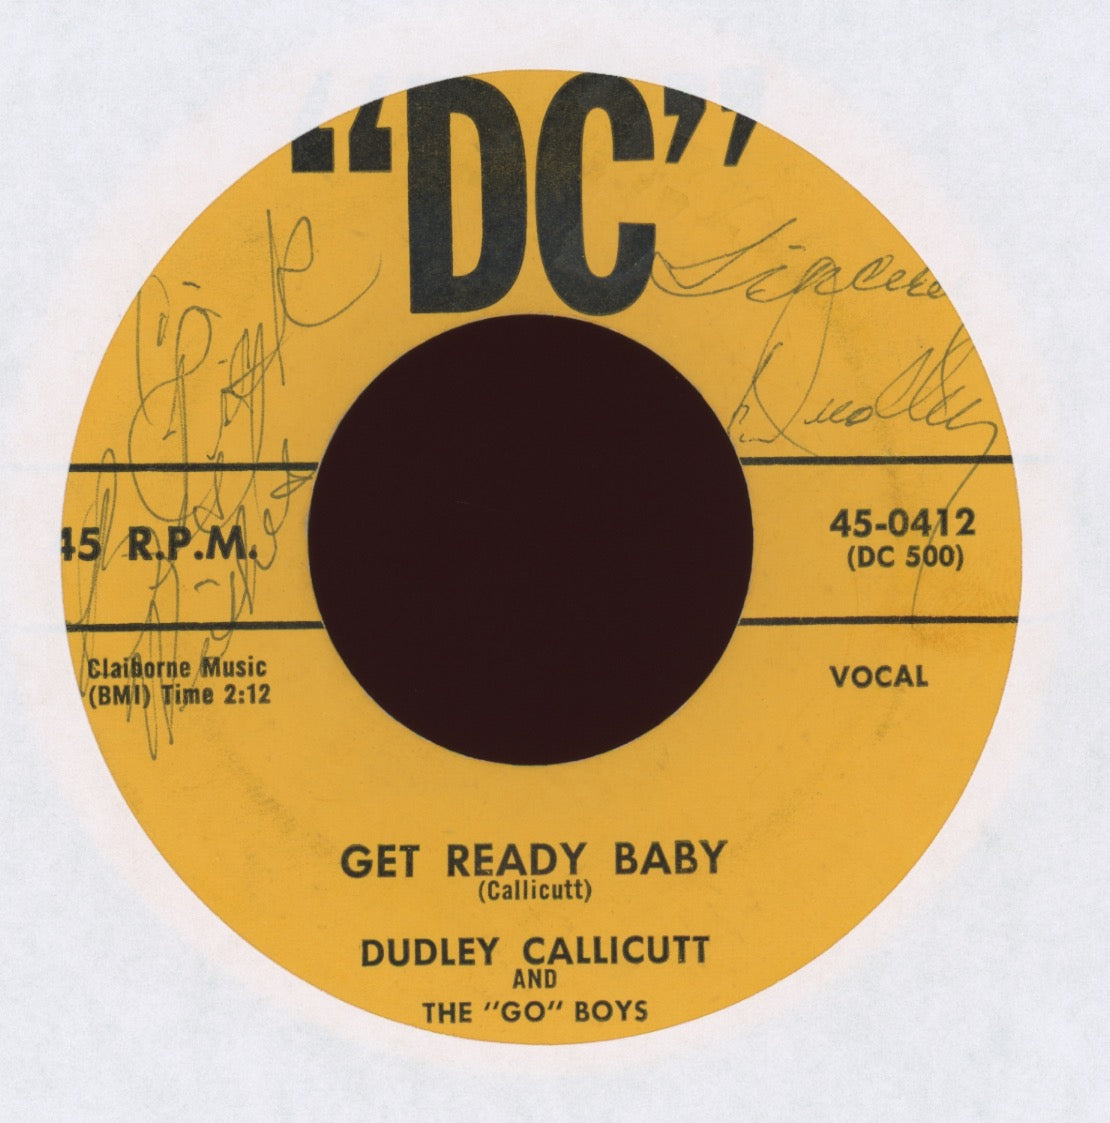 Dudley Callicutt - Get Ready Baby on DC